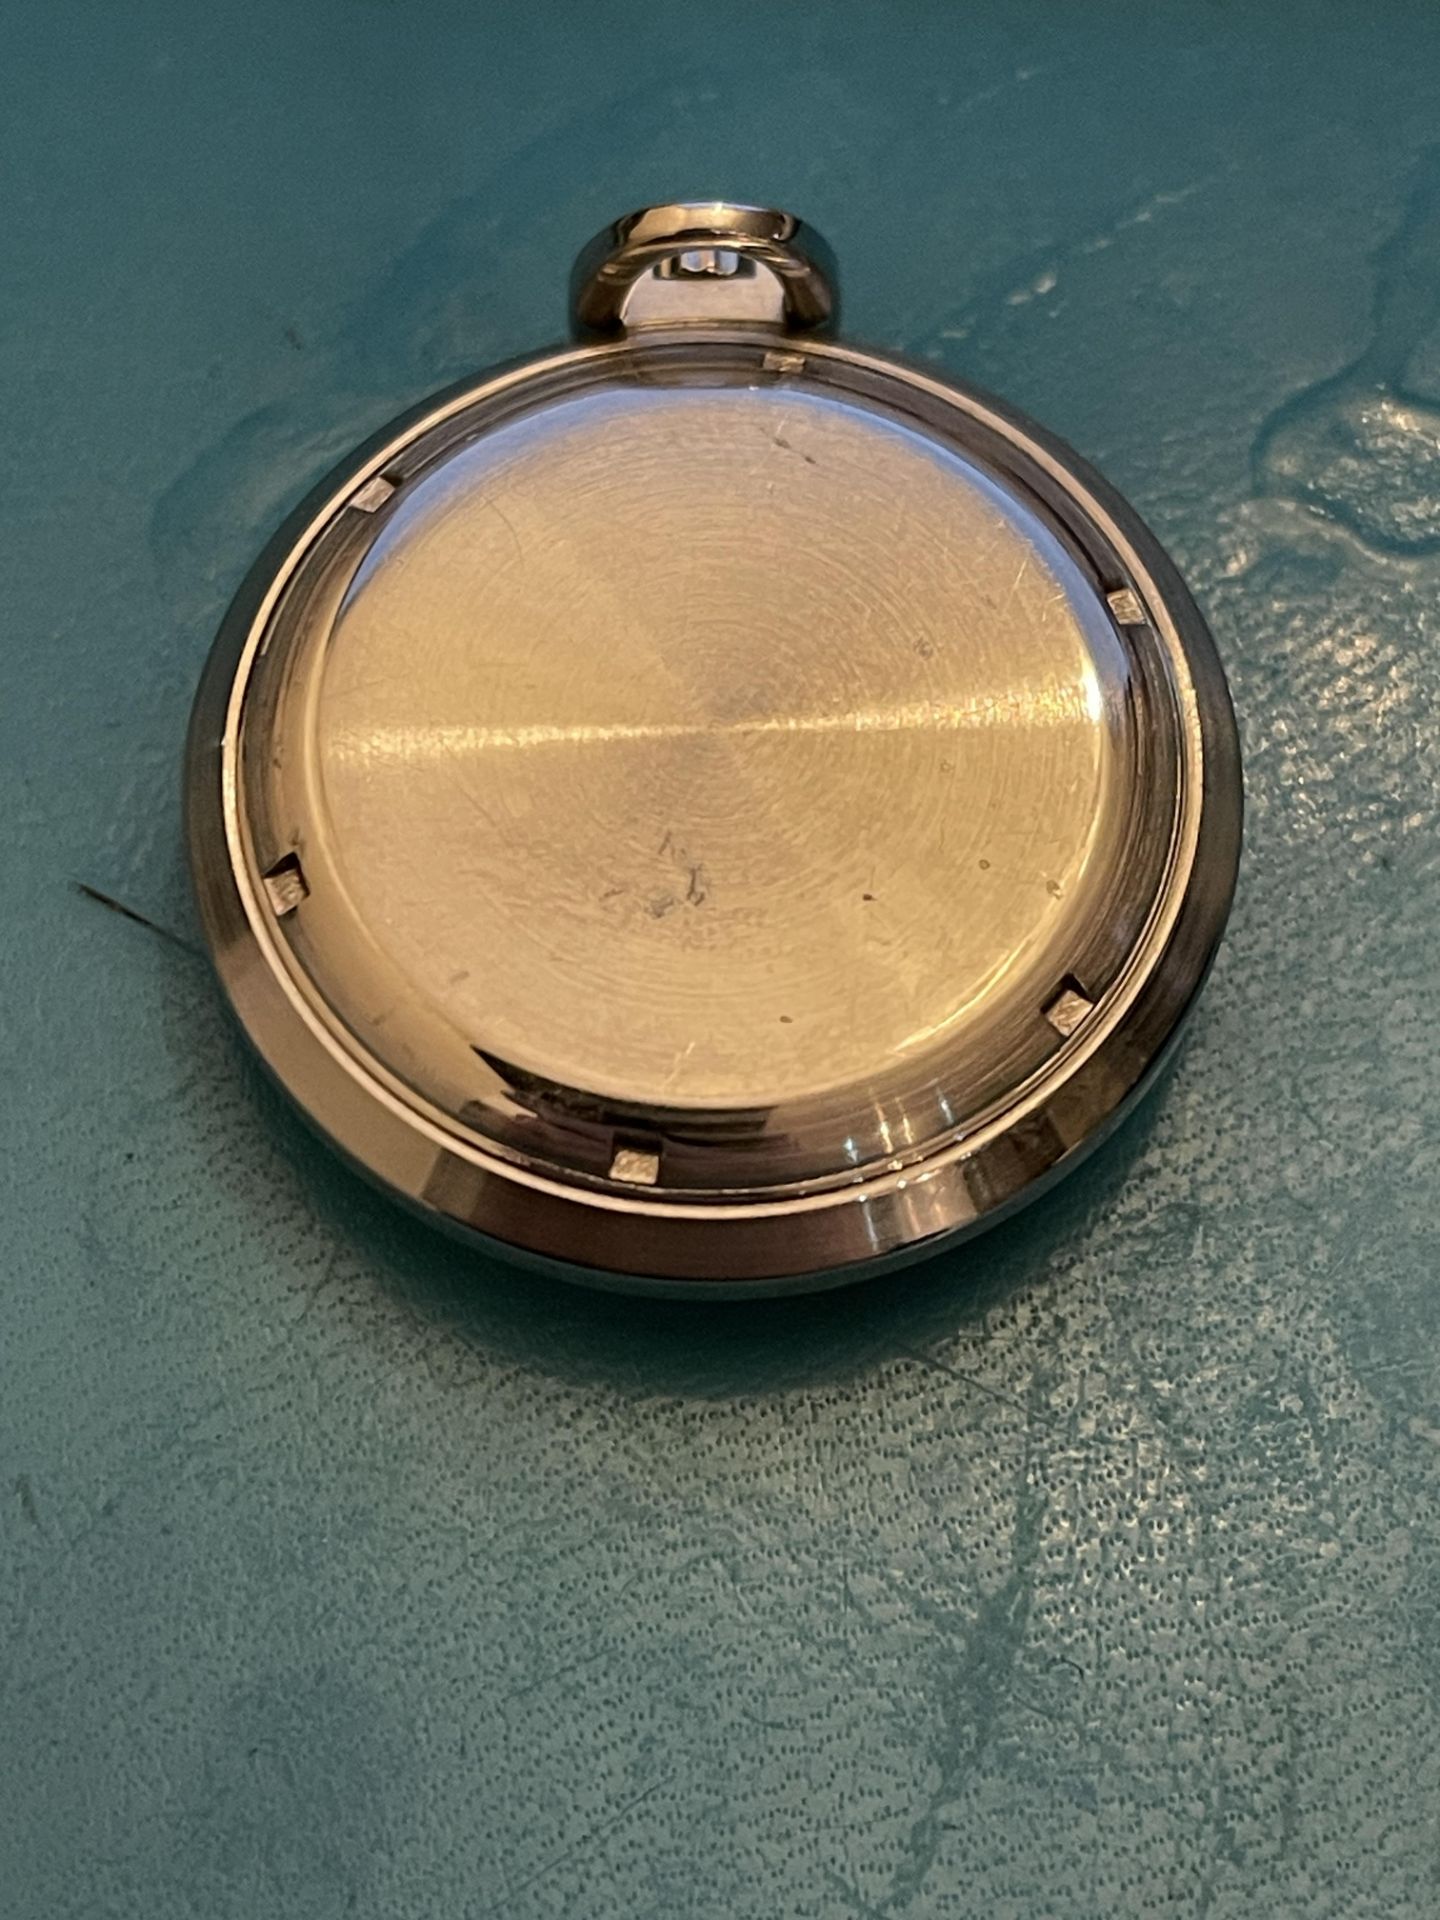 Bulova rare Accrutron men's pocket watch stainless steel - Image 4 of 8